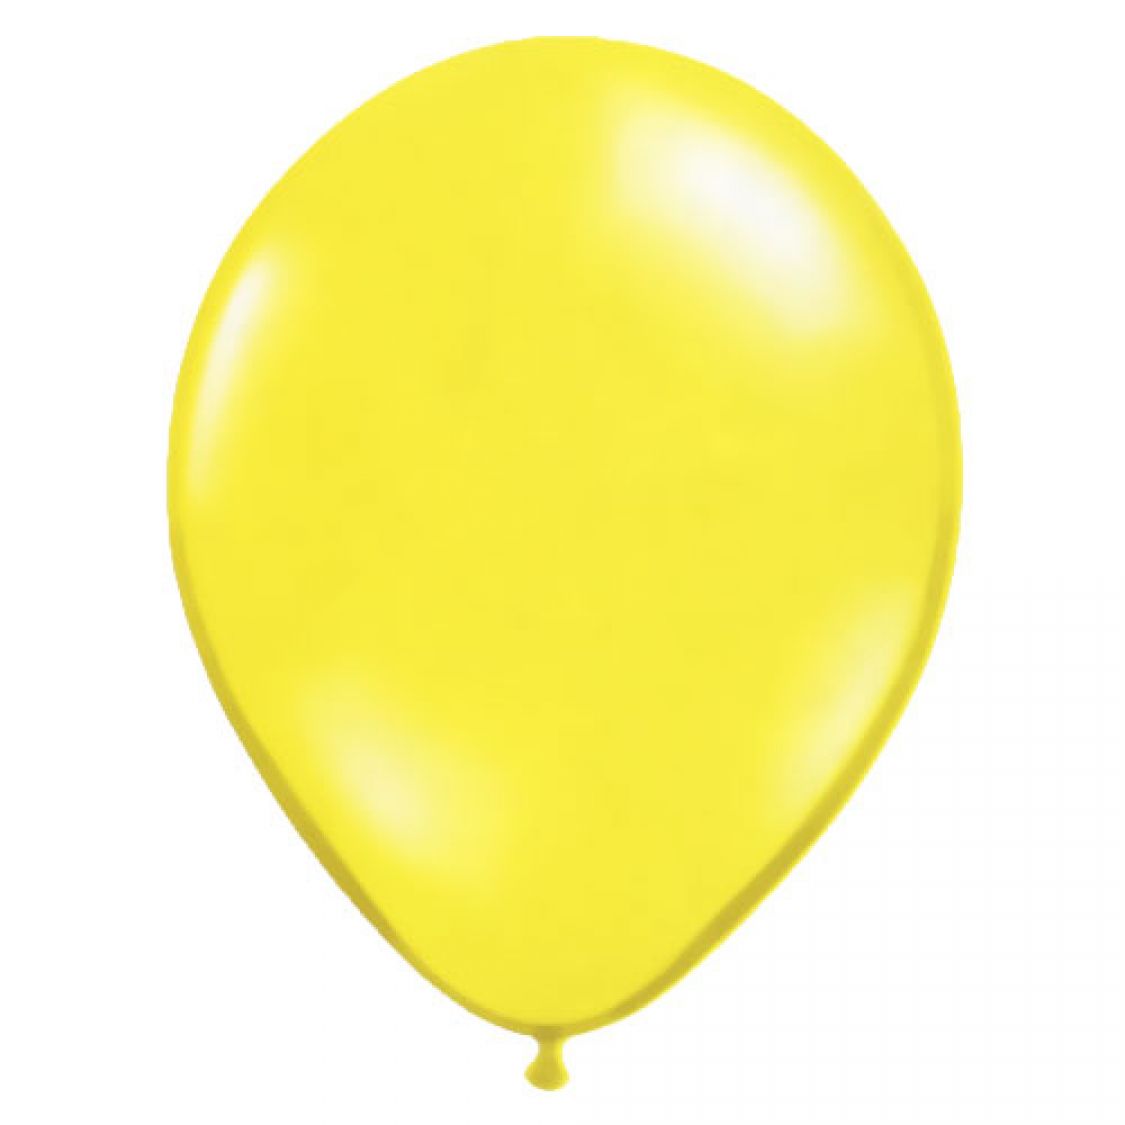 Ballon Jaune Citron (Citrine Yellow) Qualatex